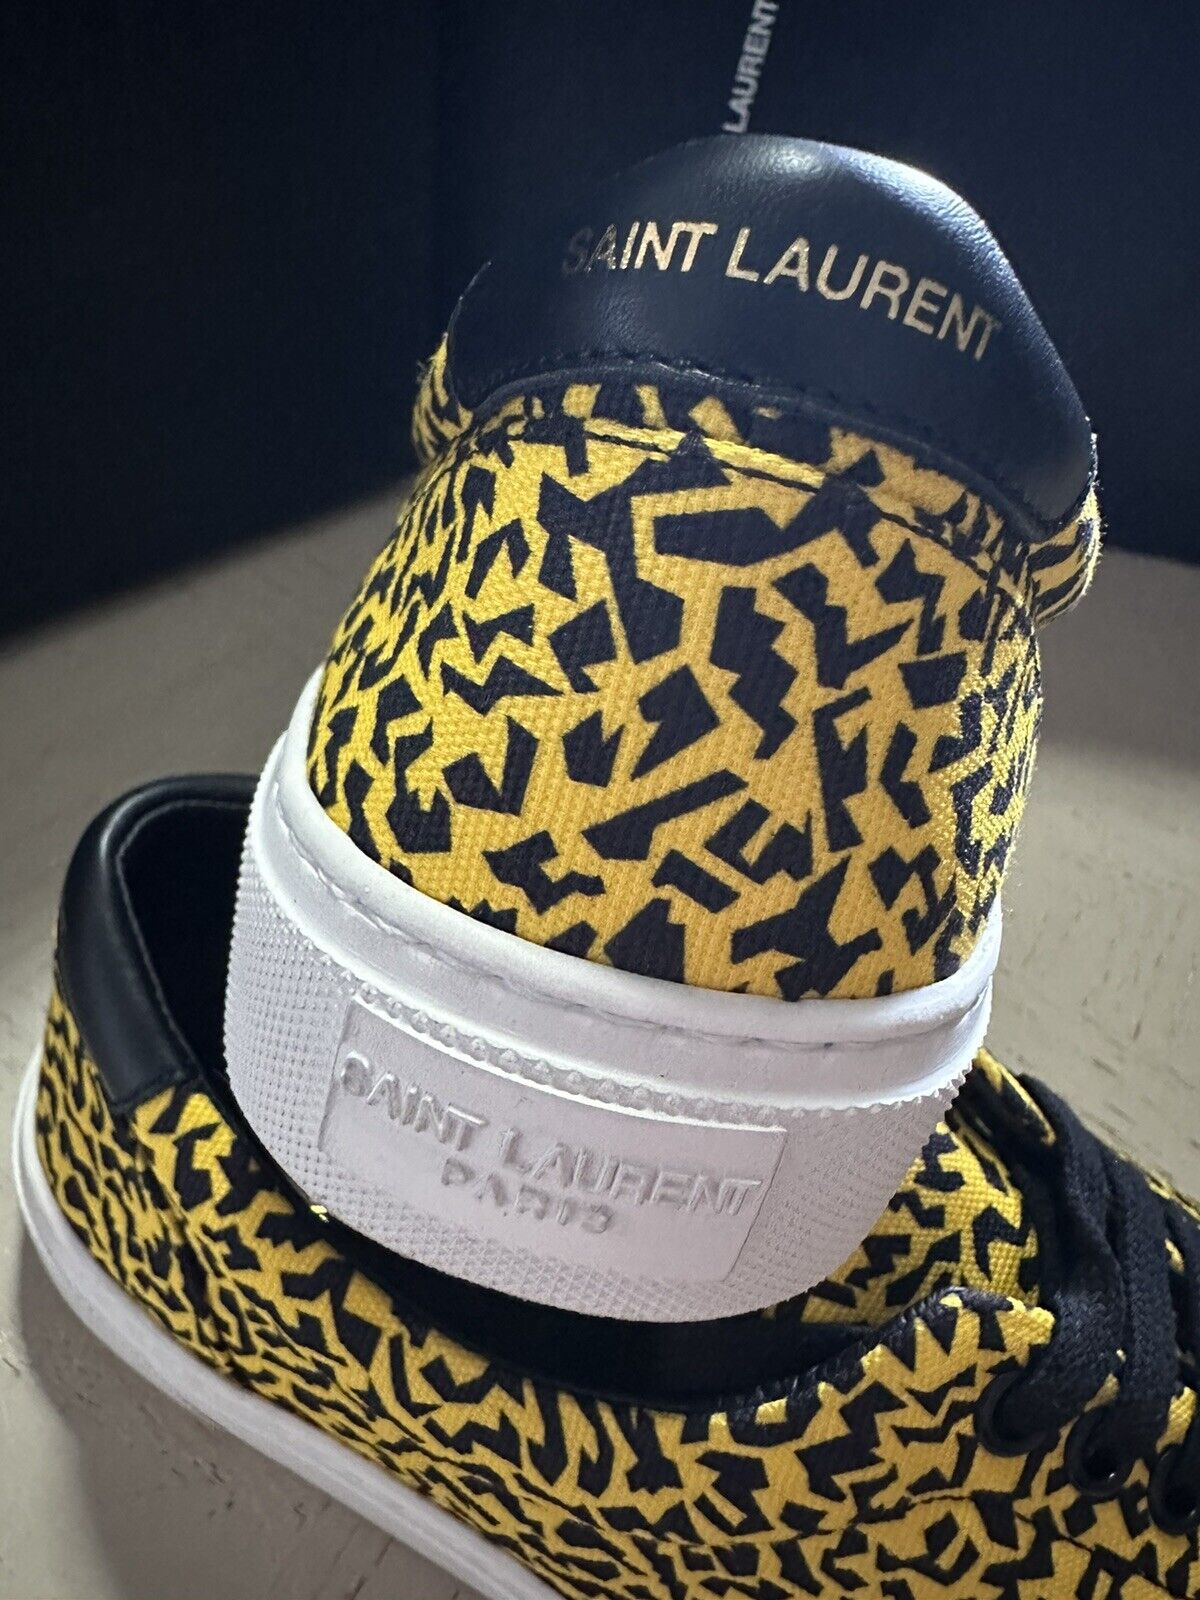 NIB Saint Laurent Herren Canvas Sneakers Schuhe Gelb/Schwarz 9 US/42 Eu Italien